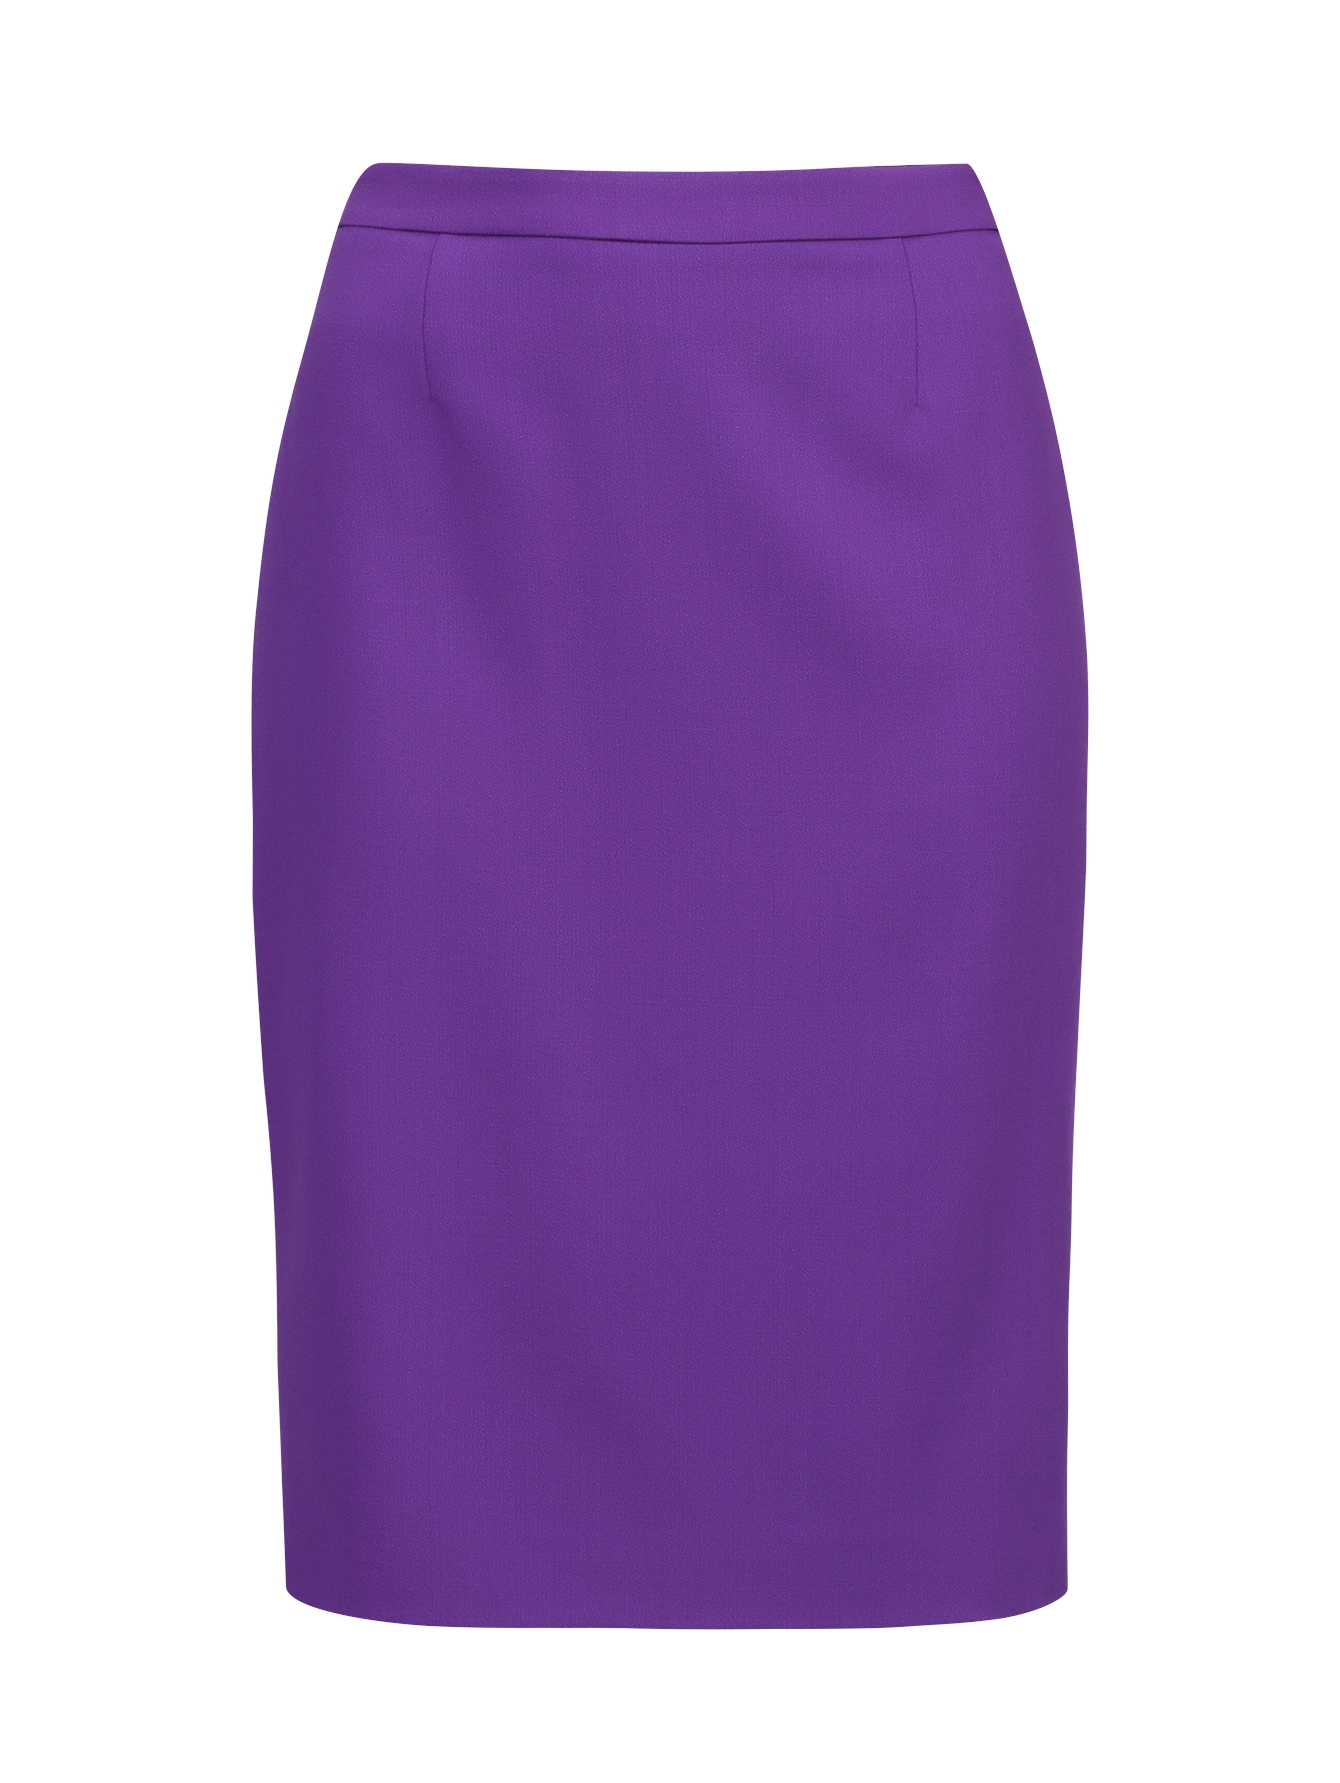 Вайлдберриз купить юбку женскую летнюю. Сиреневая юбка. Юбка карандаш. Фиолетовая юбка. Сиреневая юбка карандаш.